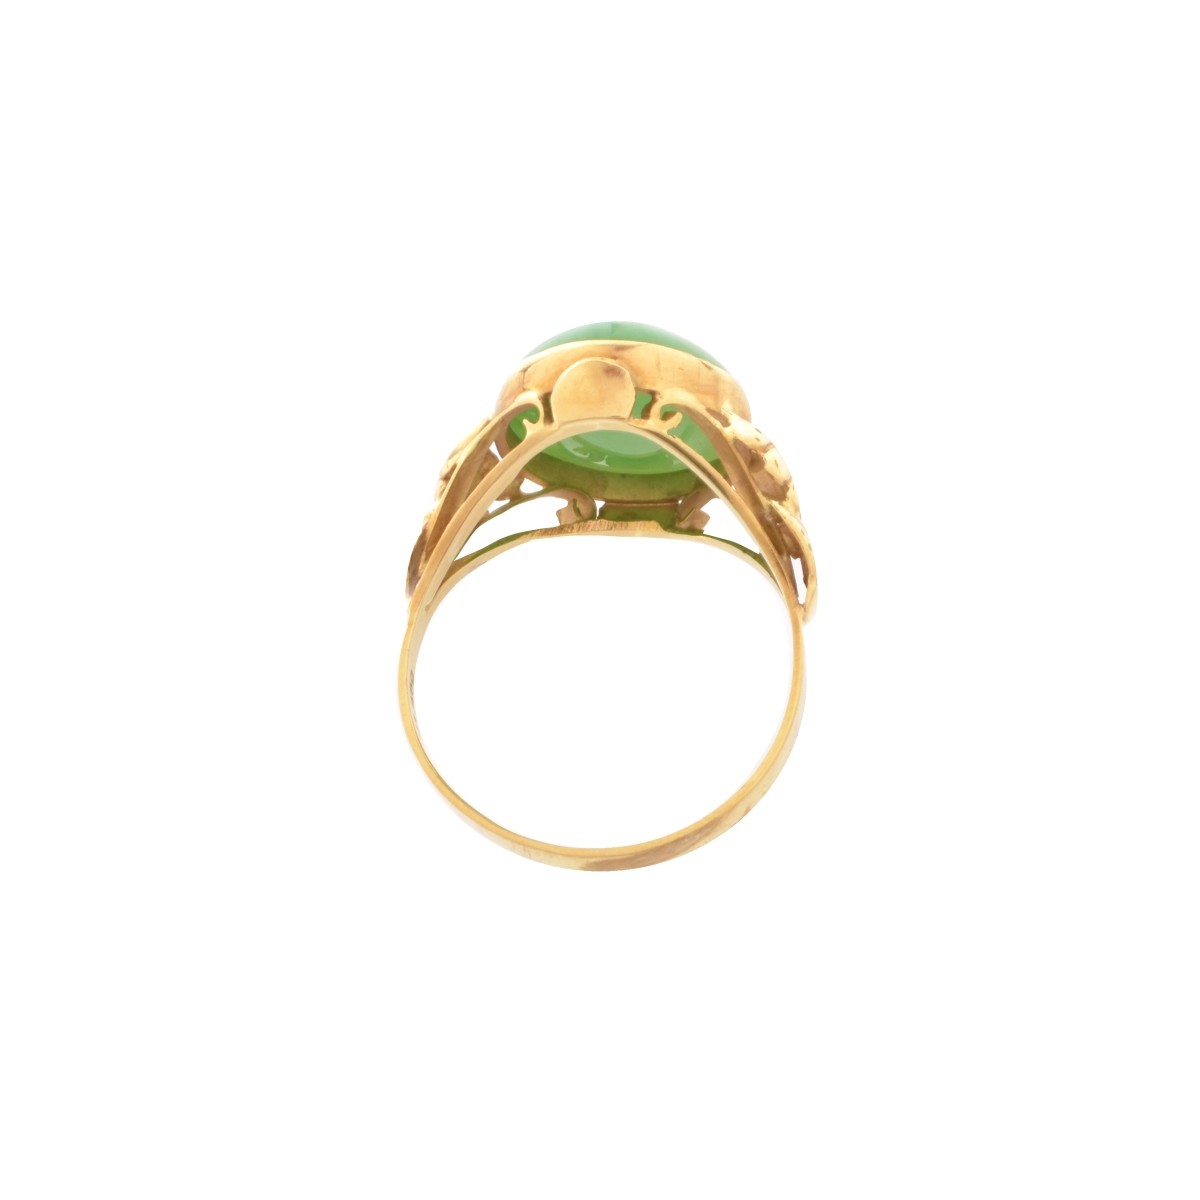 Chinese Jade and 18K Ring